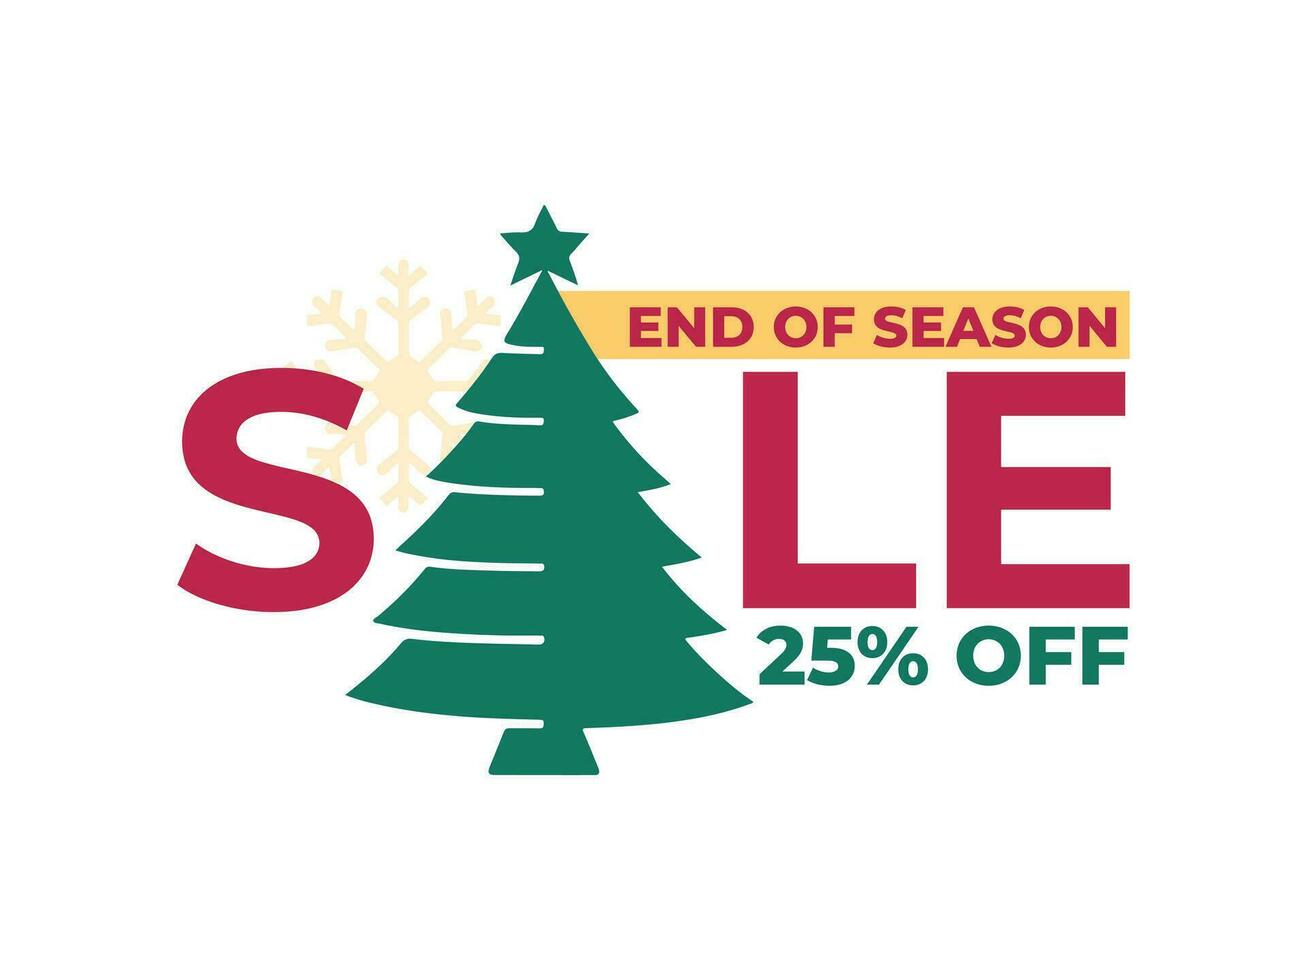 Christmas End of Season Sale Design Template vector